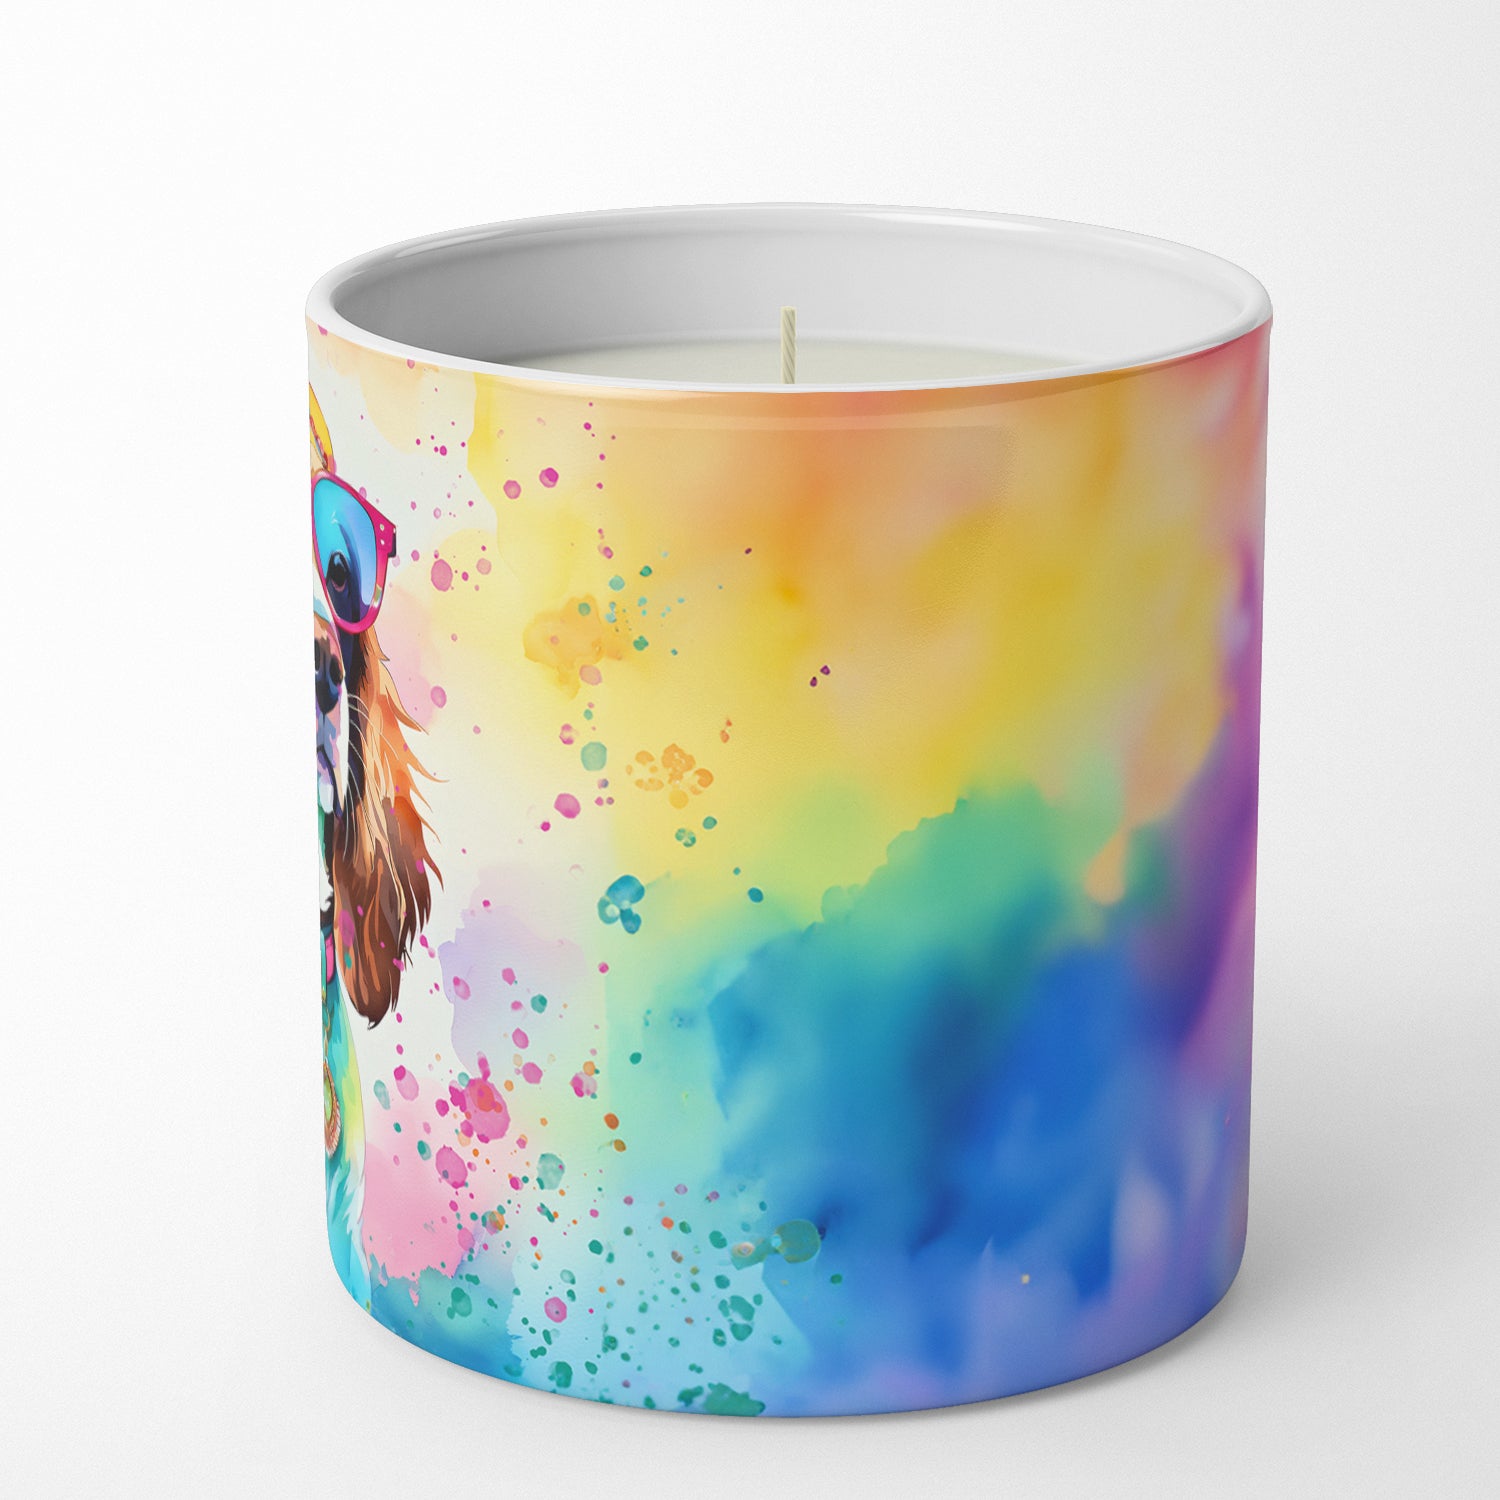 Cavalier Spaniel Hippie Dawg Decorative Soy Candle